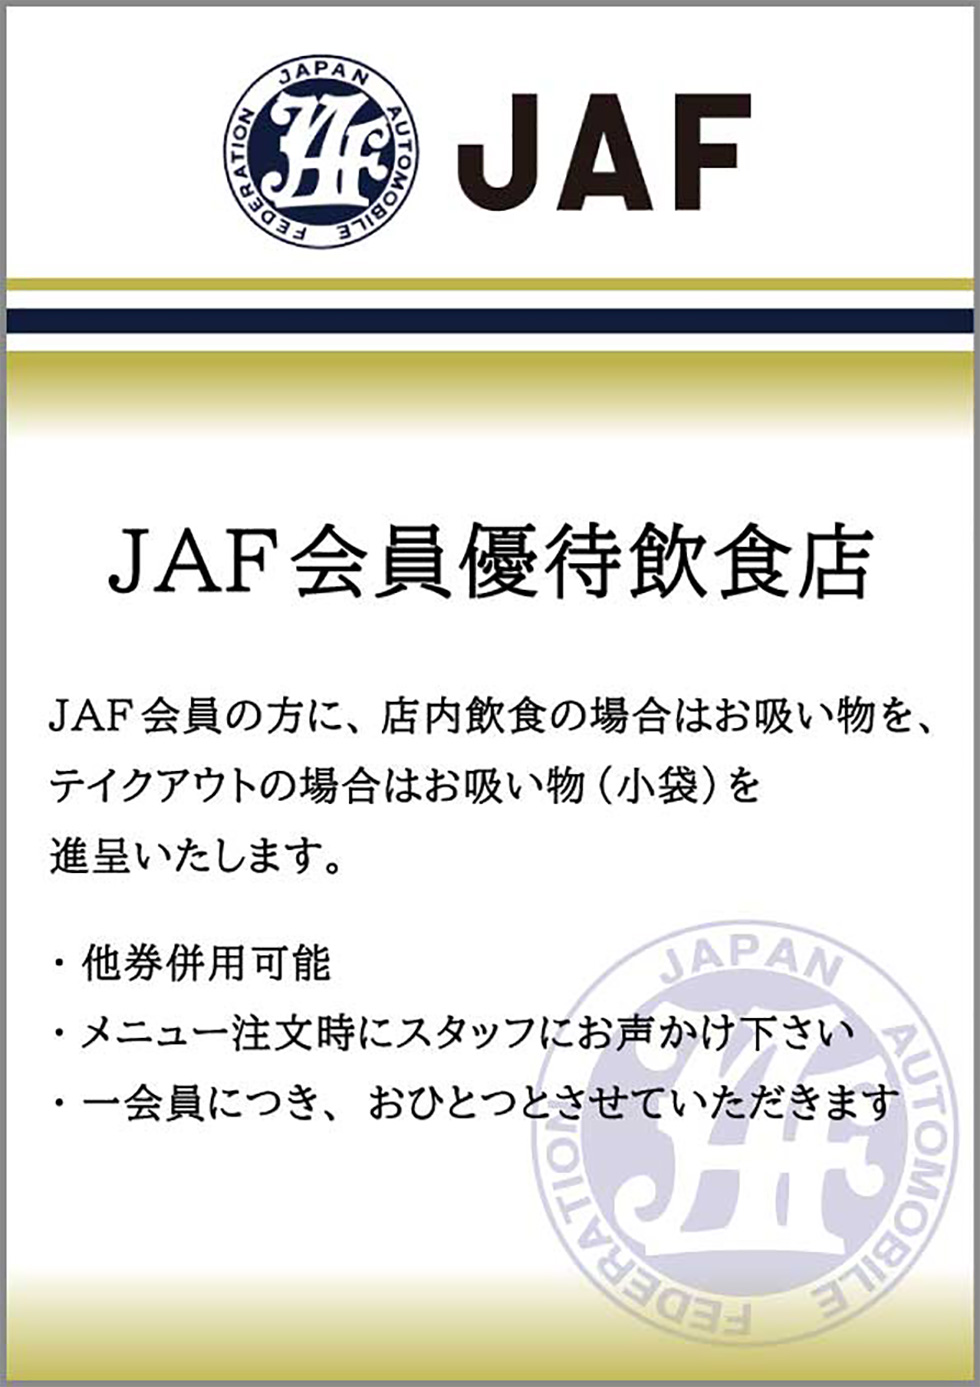 JAF会員サービスについて